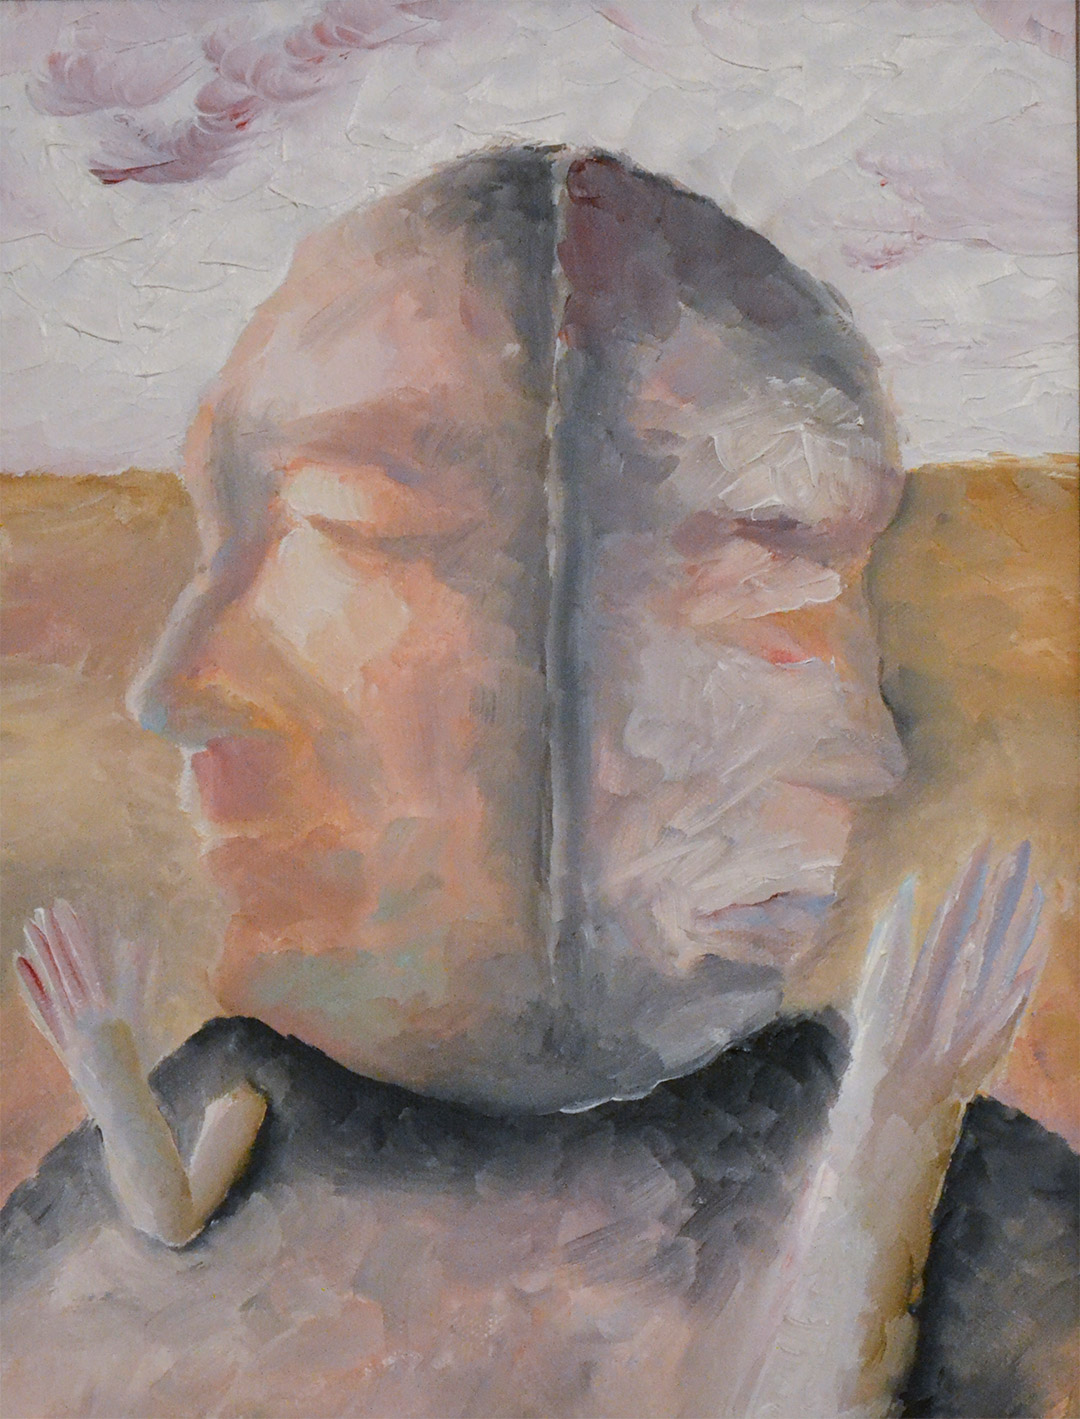 Zemansky Martin painting Mr. Head